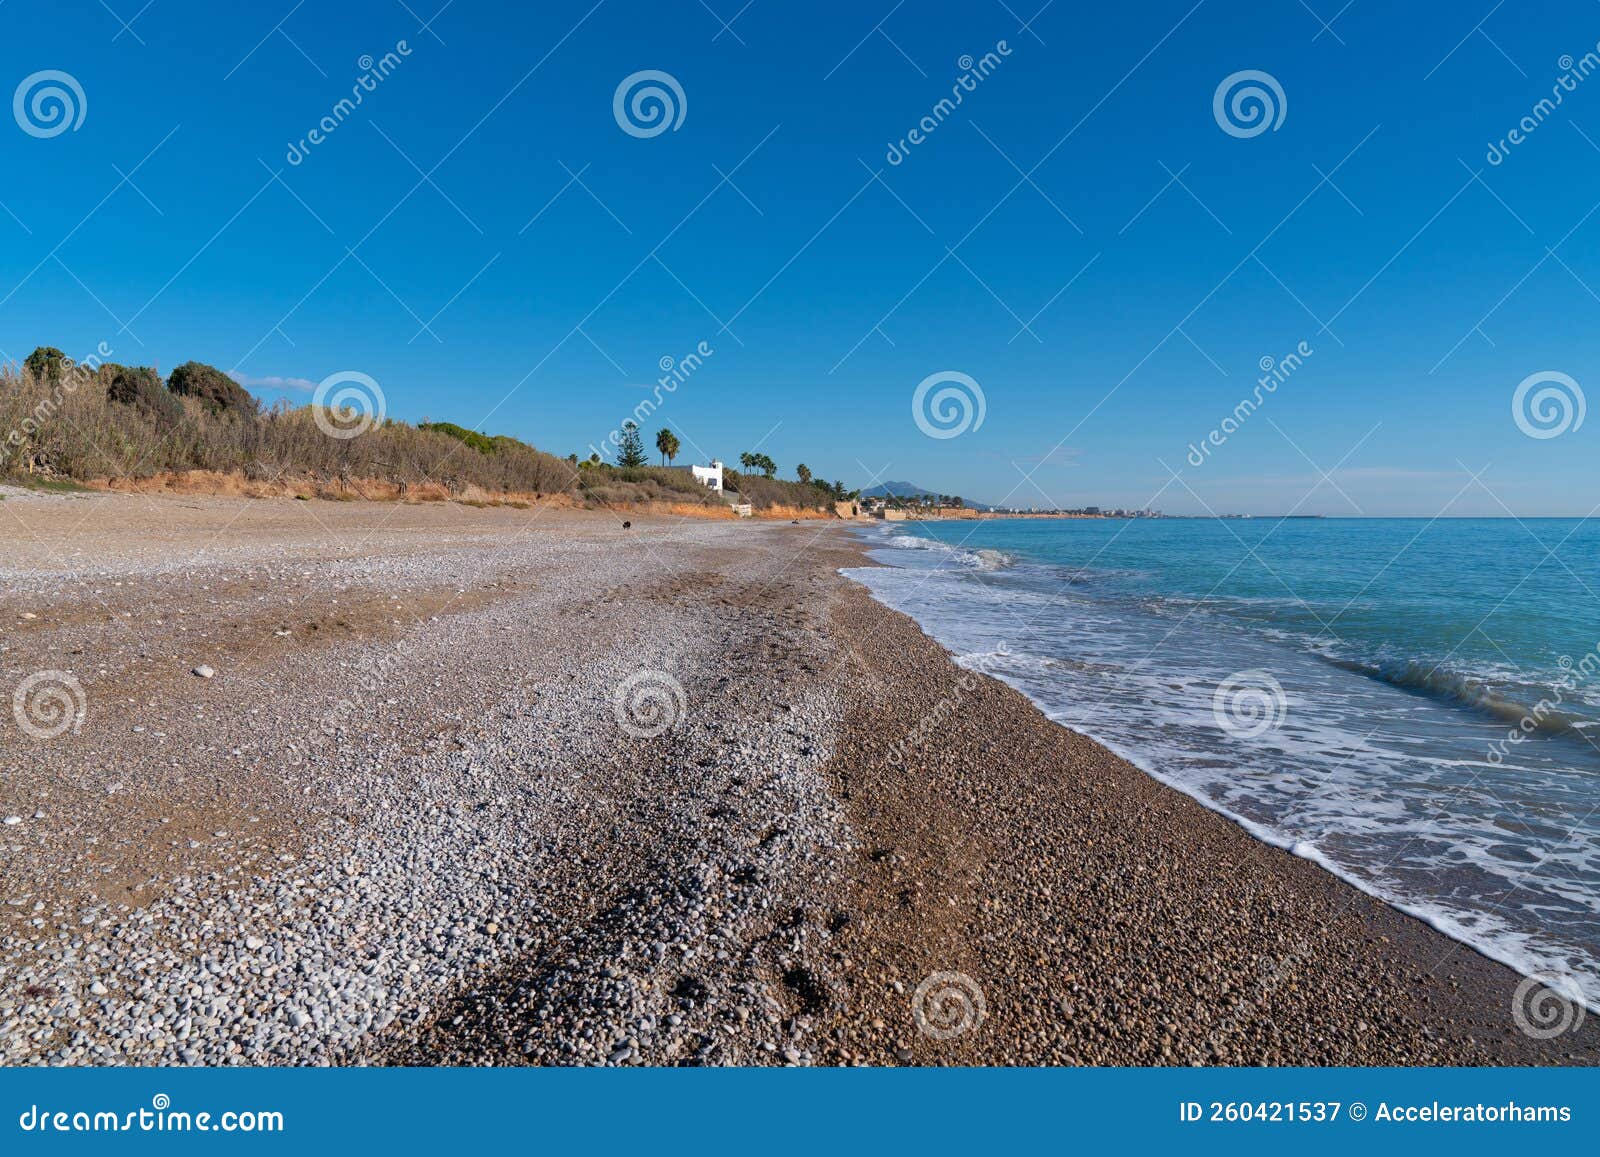 benicarlo beach spain near alegria del mar camping